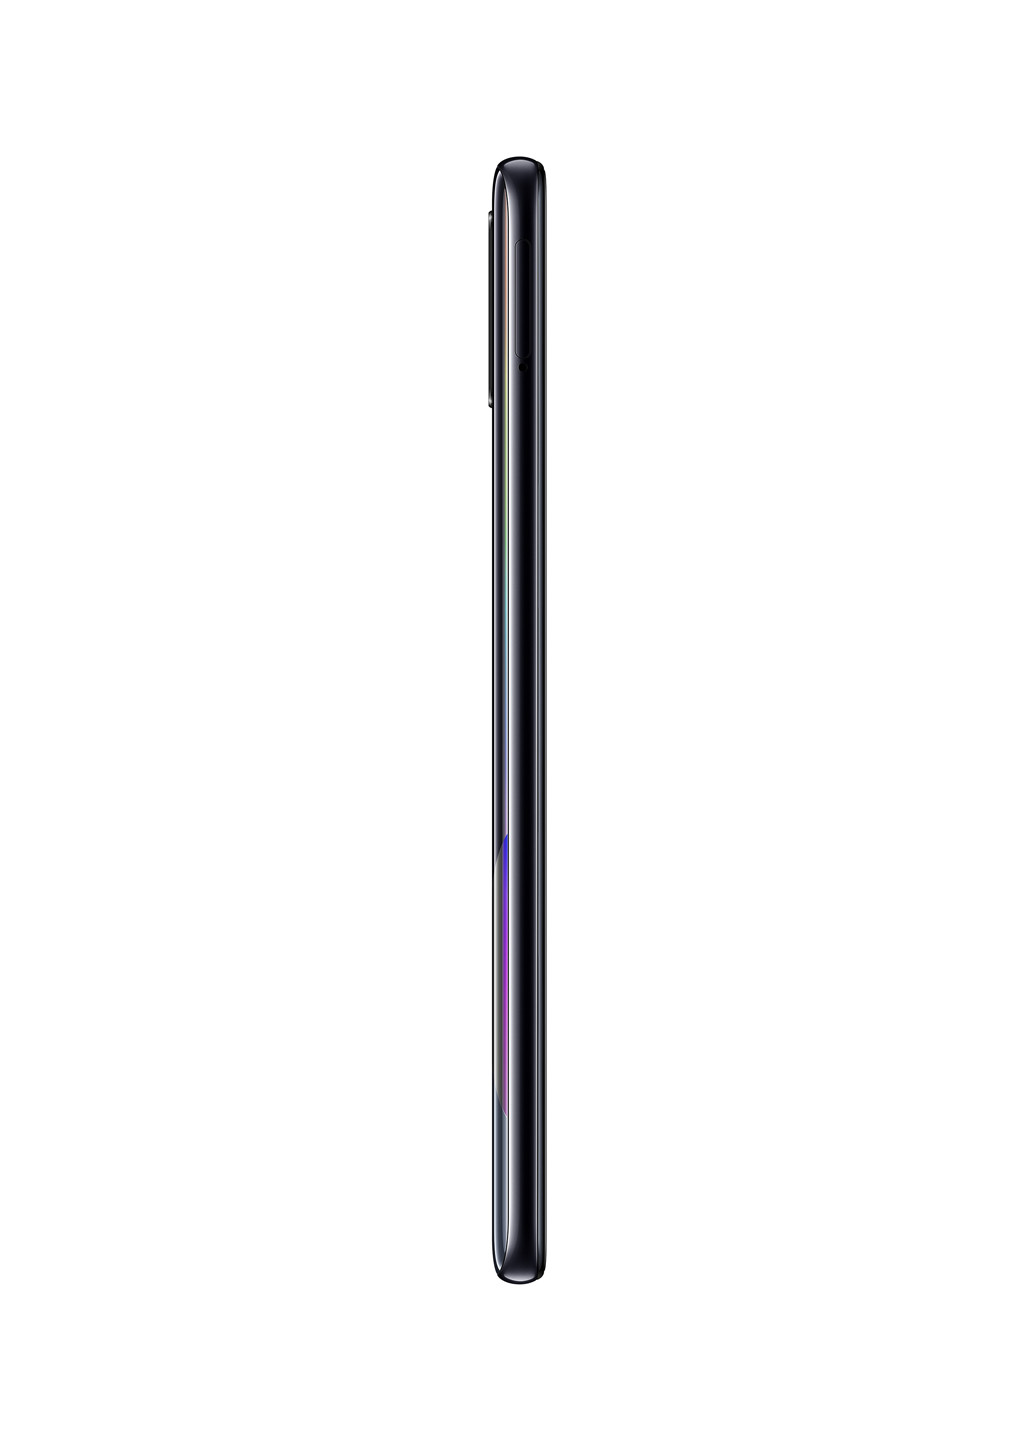 Смартфон Galaxy Samsung A30s 3/32GB Prism Crush Black (SM-A307FZKUSEK) чёрный